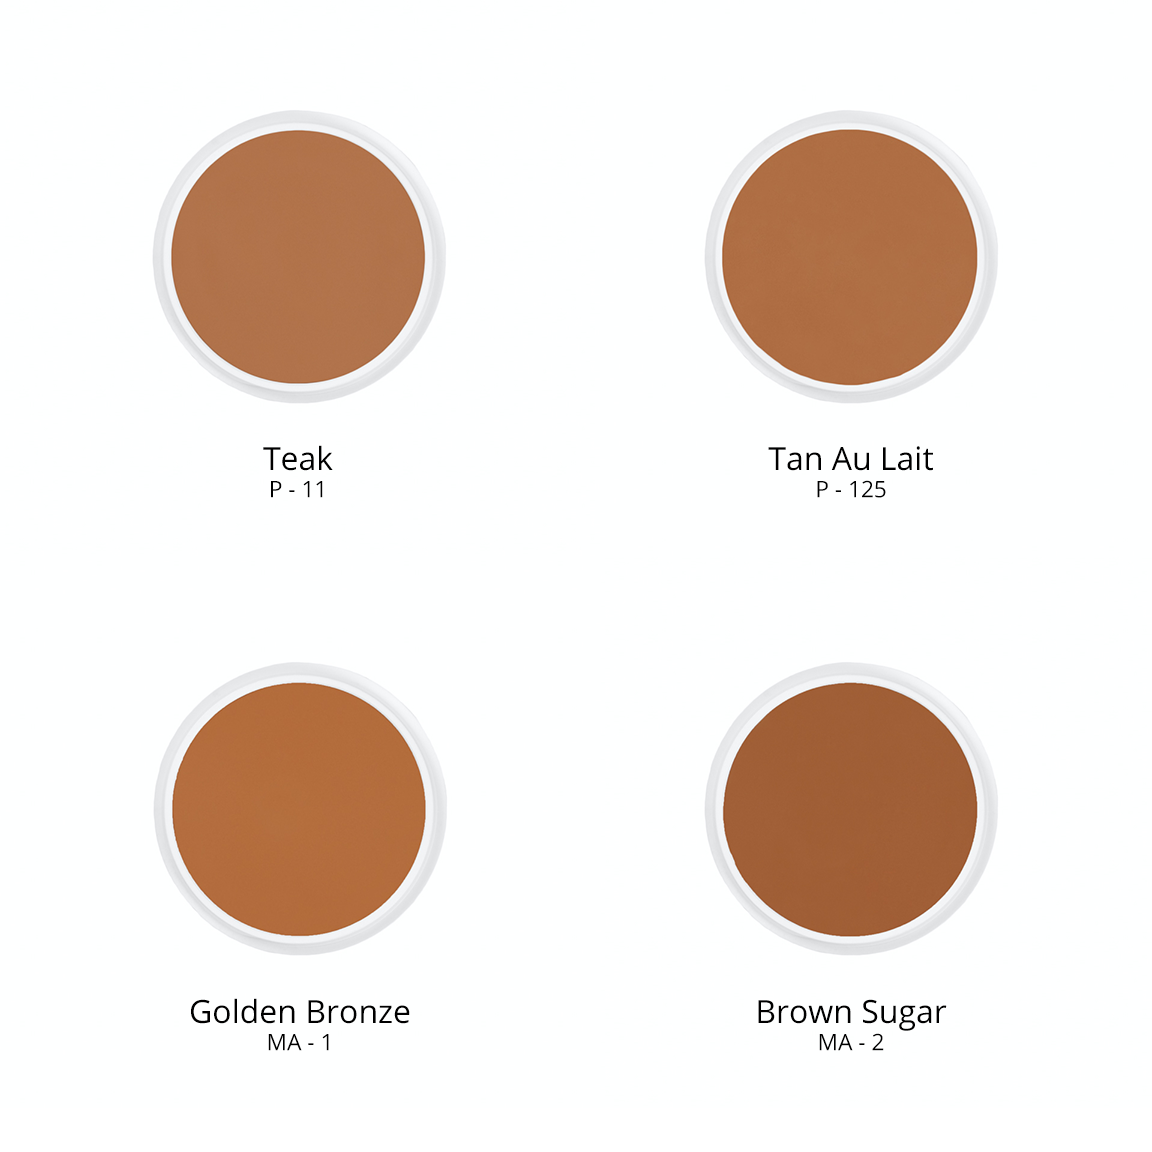 Ben Nye creme foundation in 4 shades: Teak P - 11, Tan Au Lait P - 125, Golden Bronze MA - 1, and Brown Sugar MA - 2